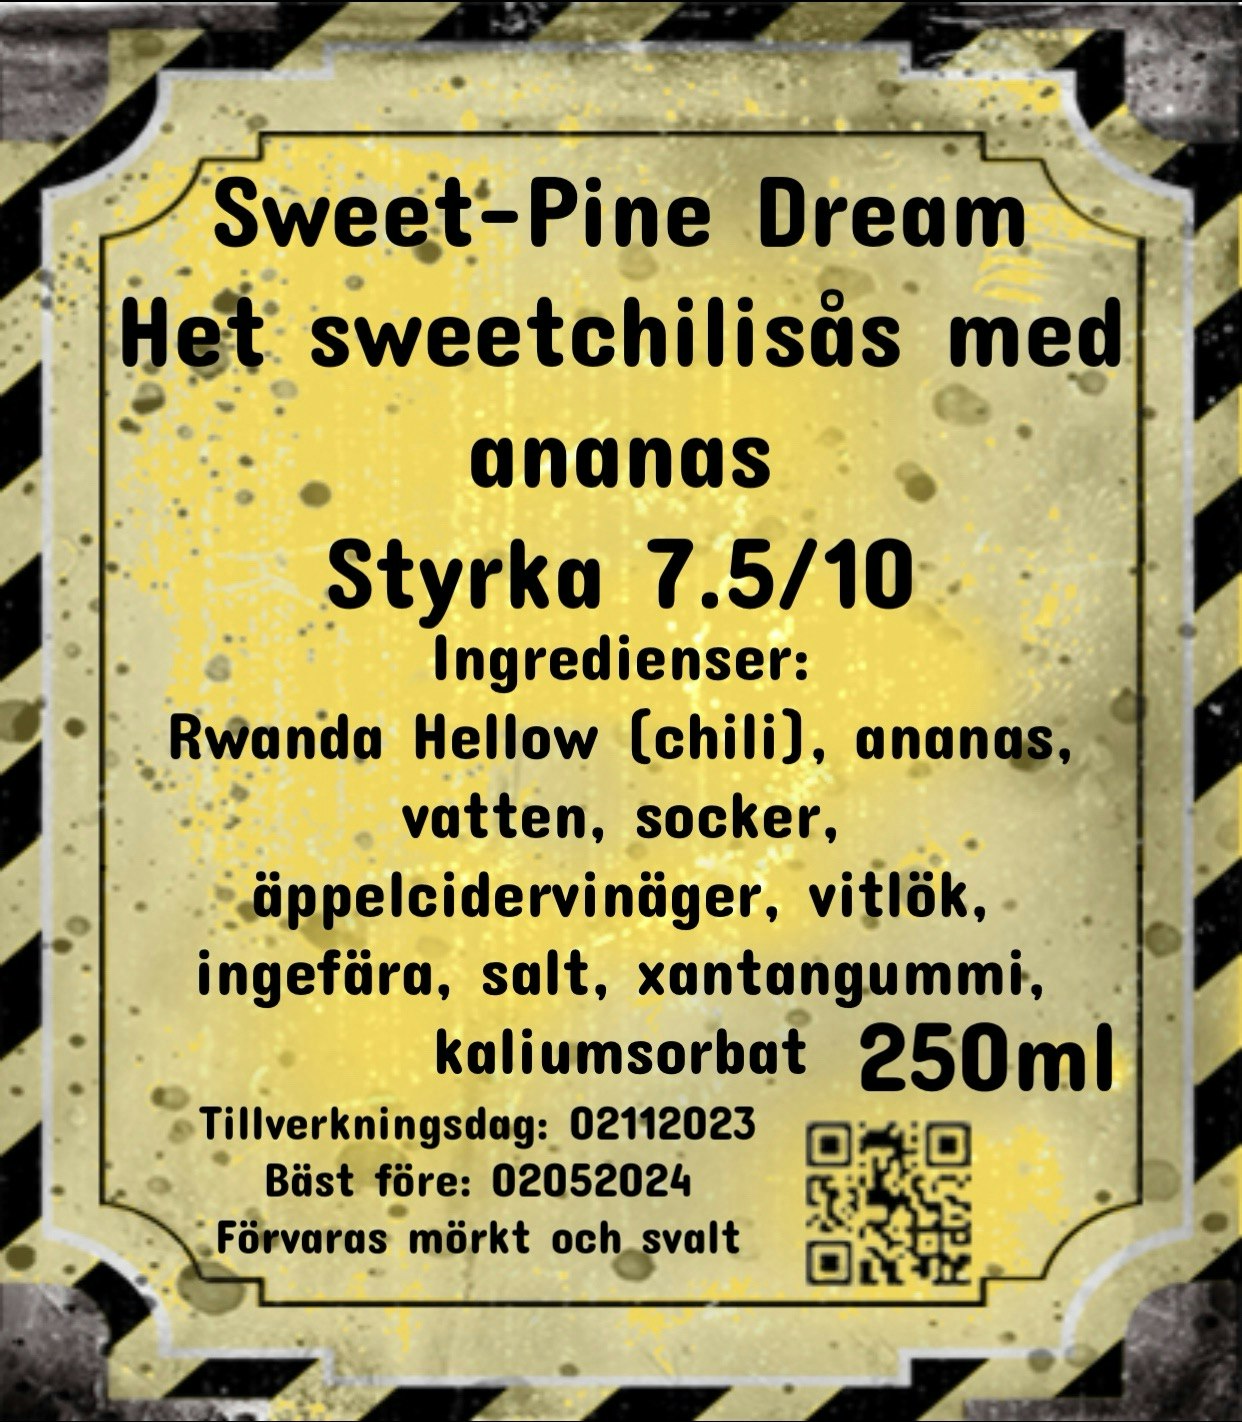 Sweet-Pine Dream